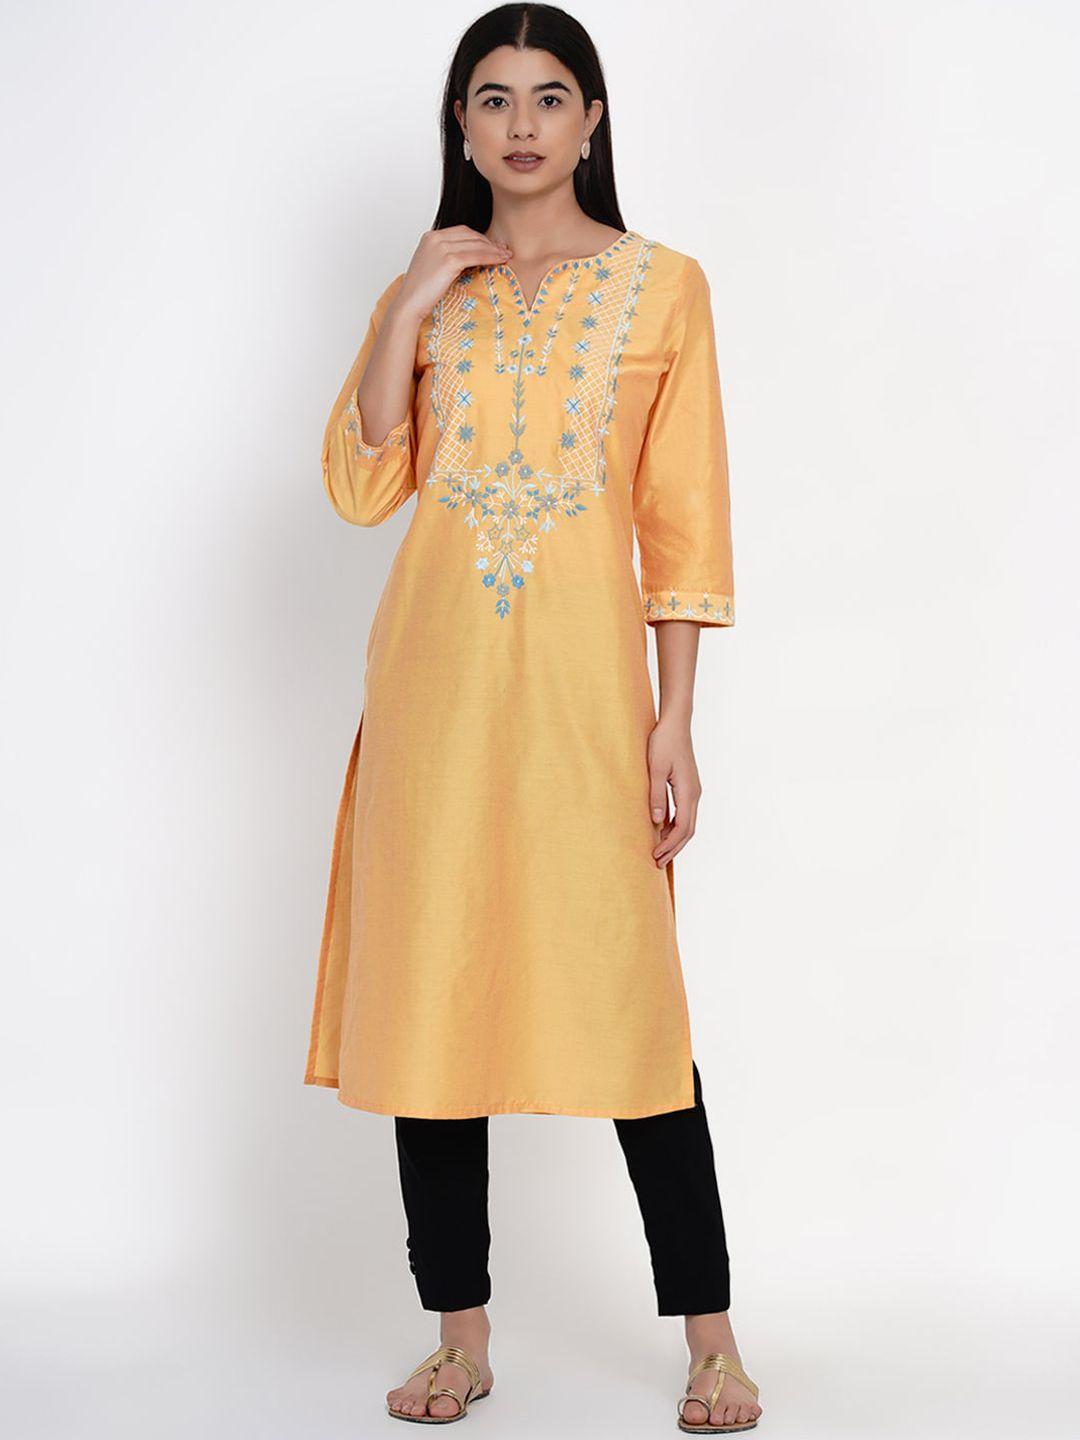 ix impression women yellow embroidered thread work kurta